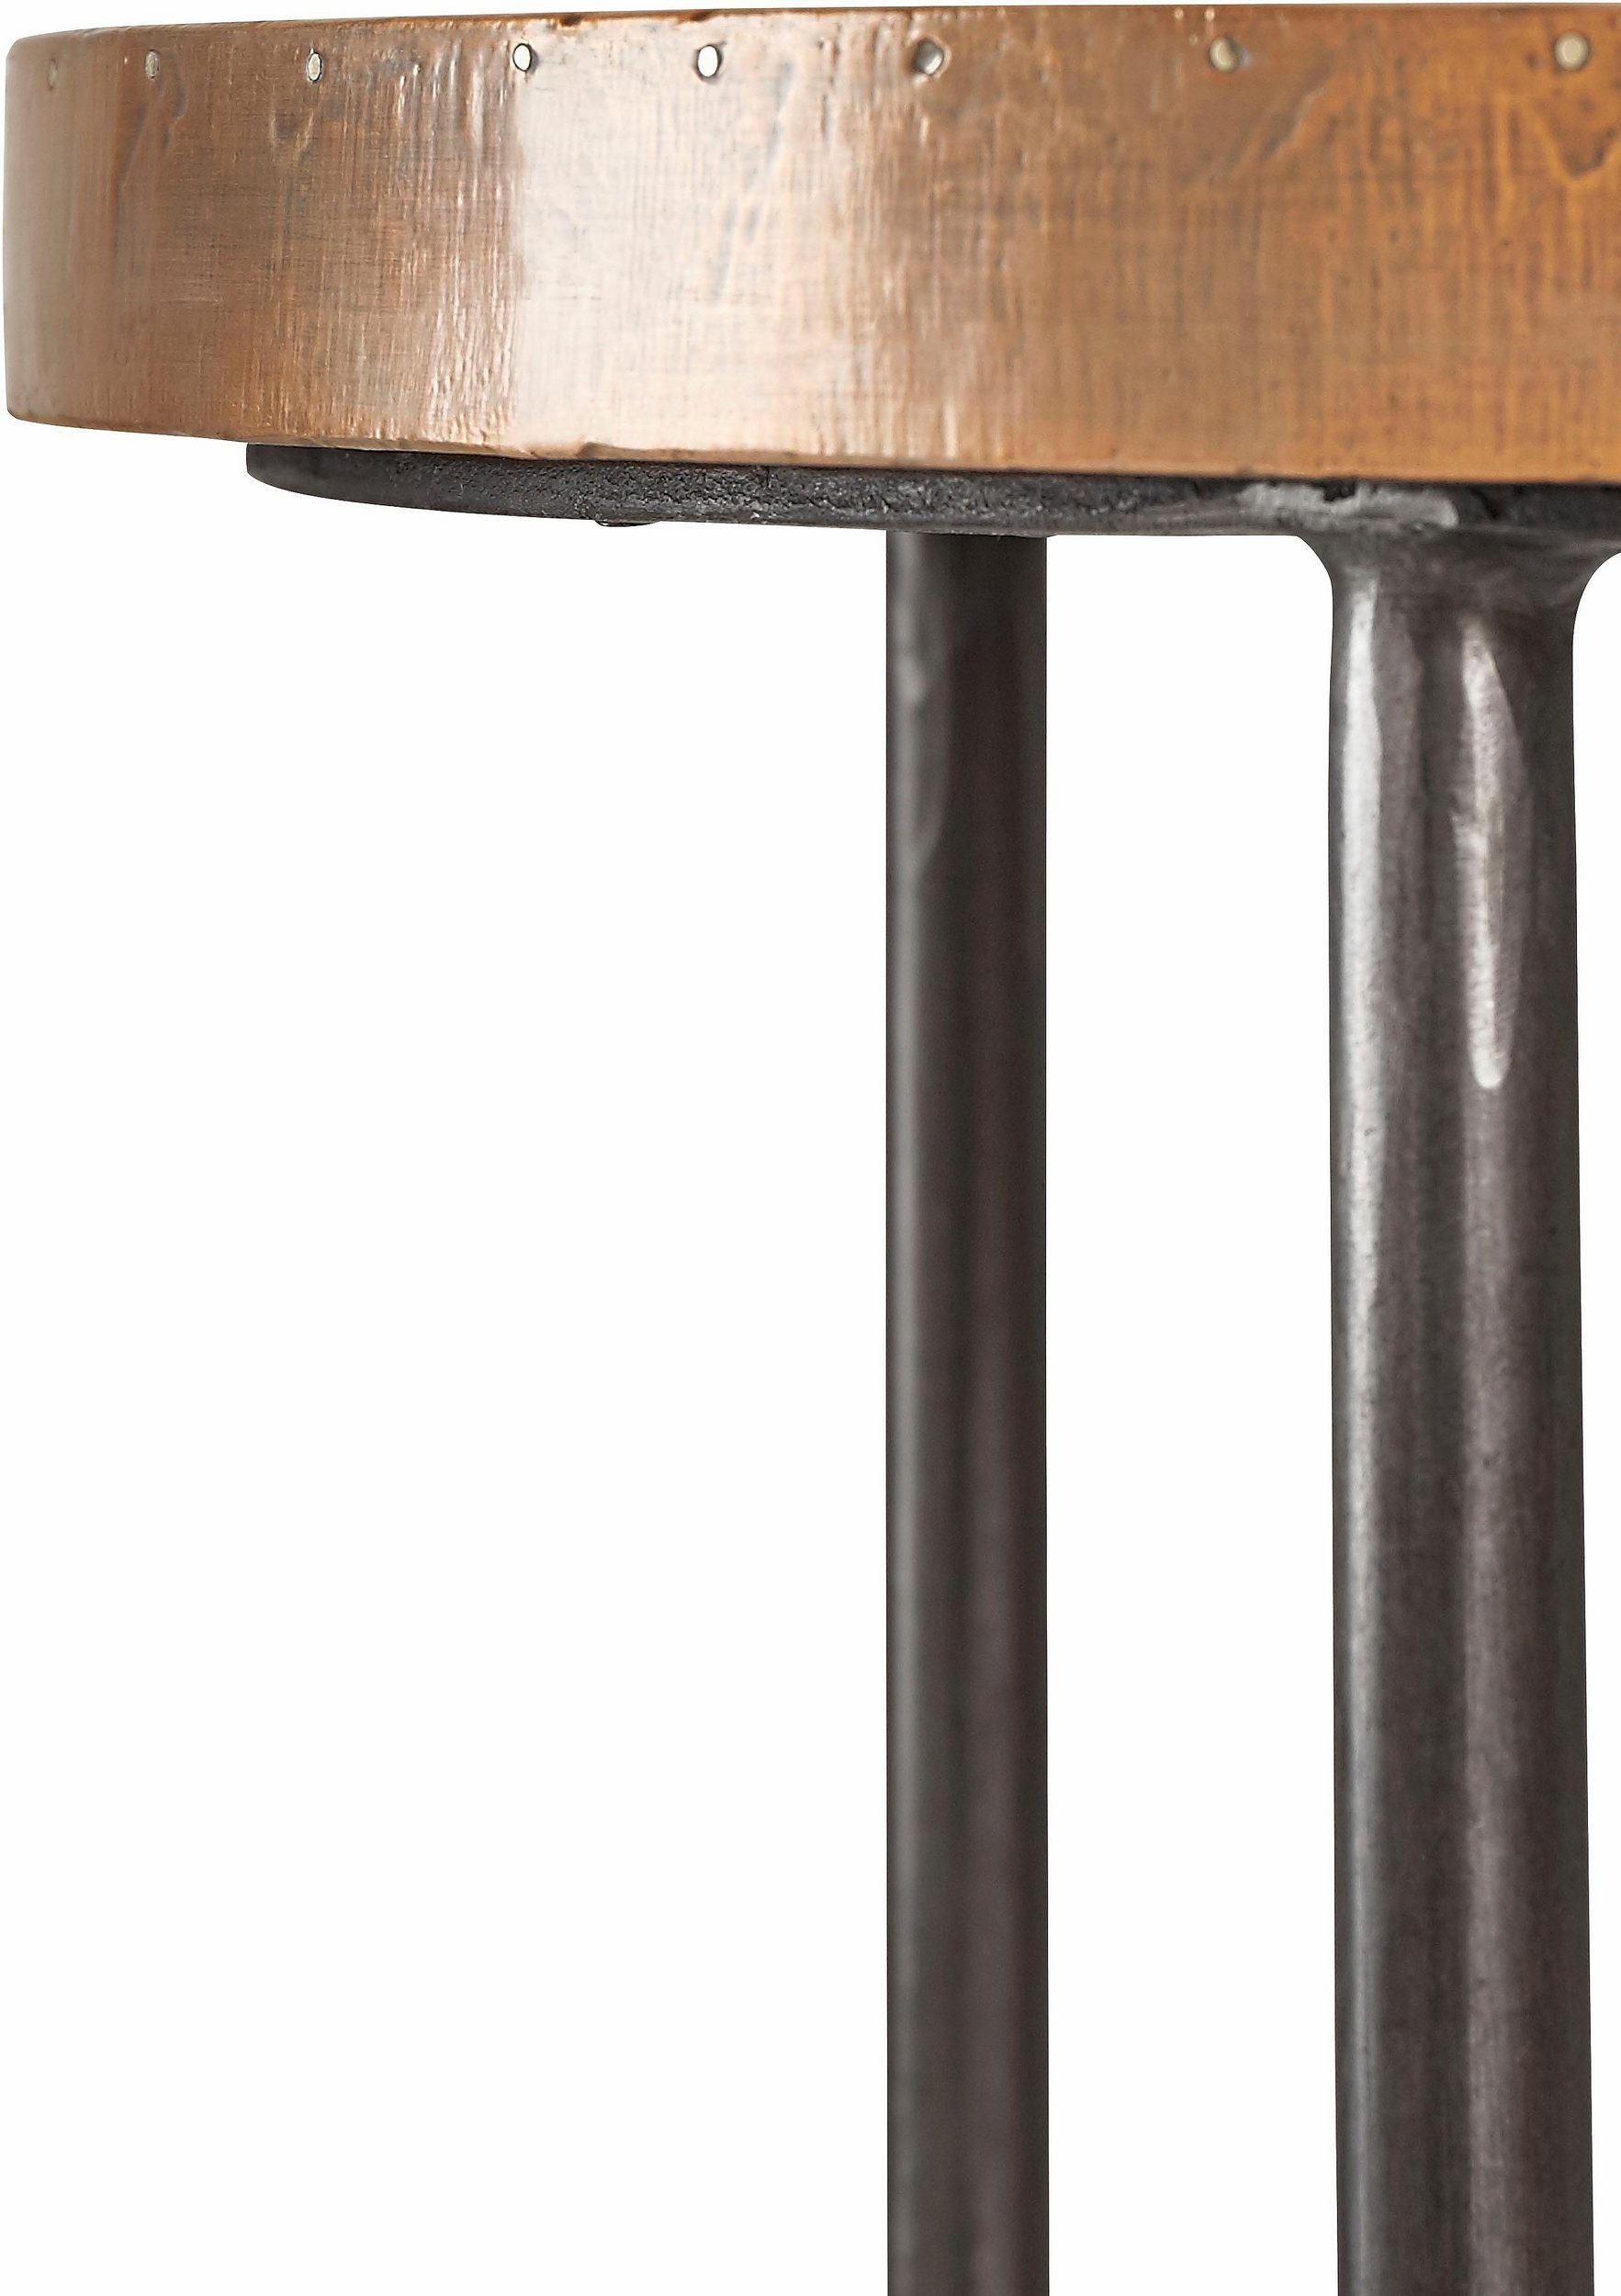 4 Tischplattenstärke Kaan, 55 cm Beistelltisch Durchmesser cm, loft24